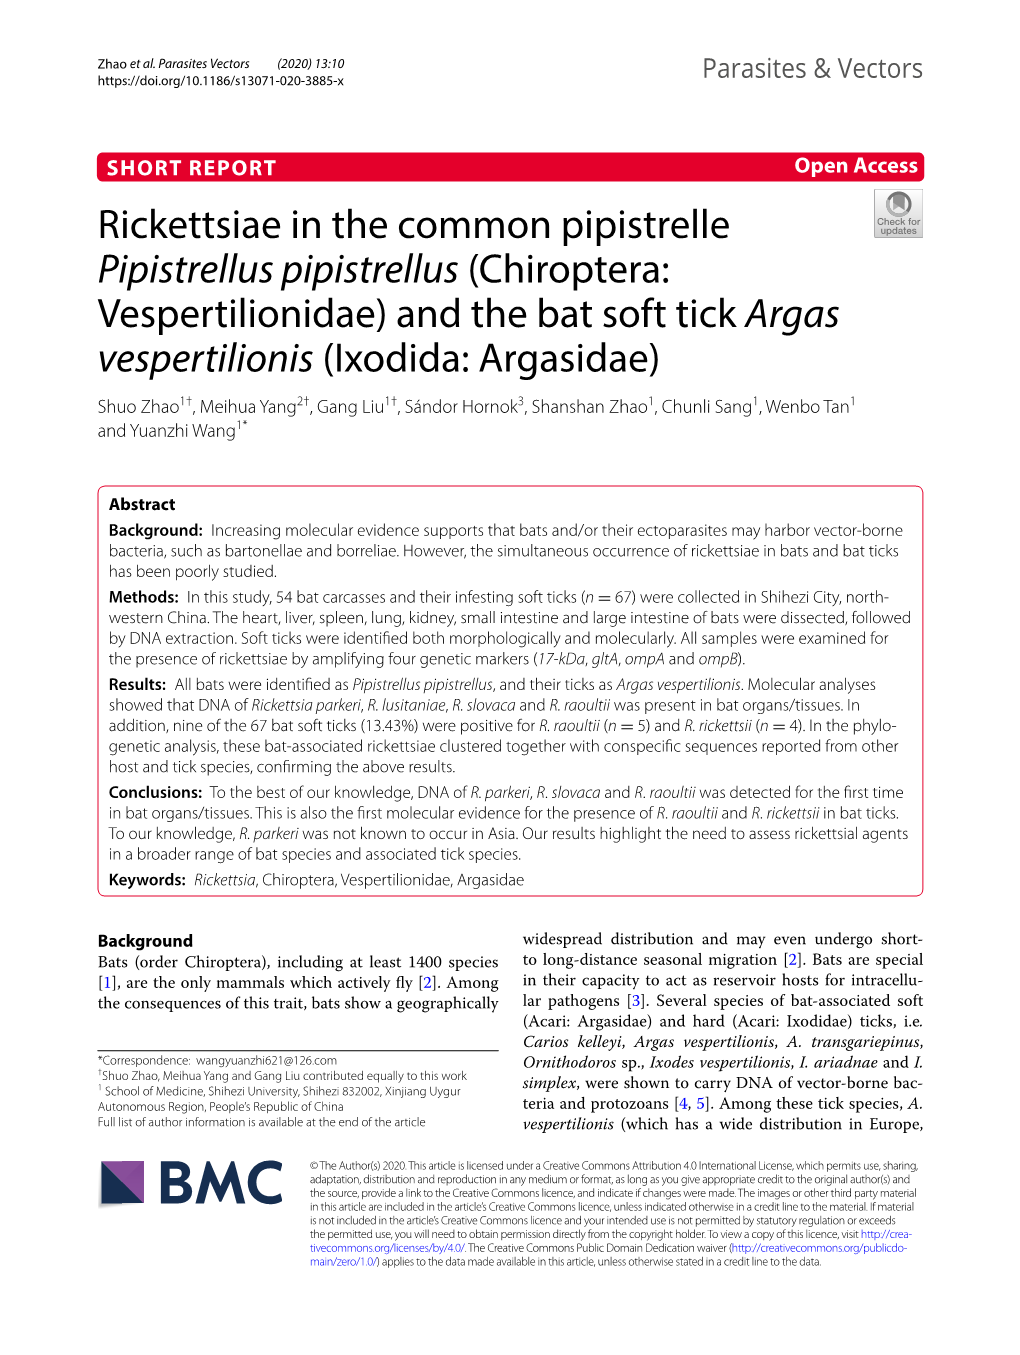 (Chiroptera: Vespertilionidae) and the Bat Soft Tick Argas Vespe